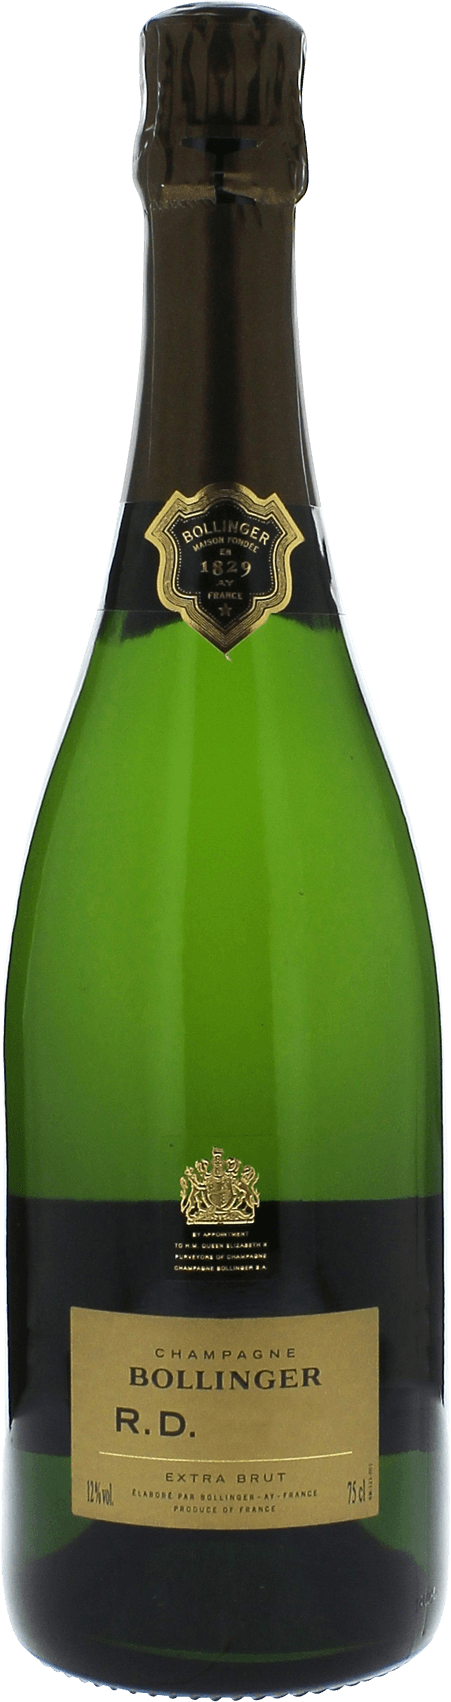 Bollinger r.d. avec coffret 2007  Bollinger, Champagne